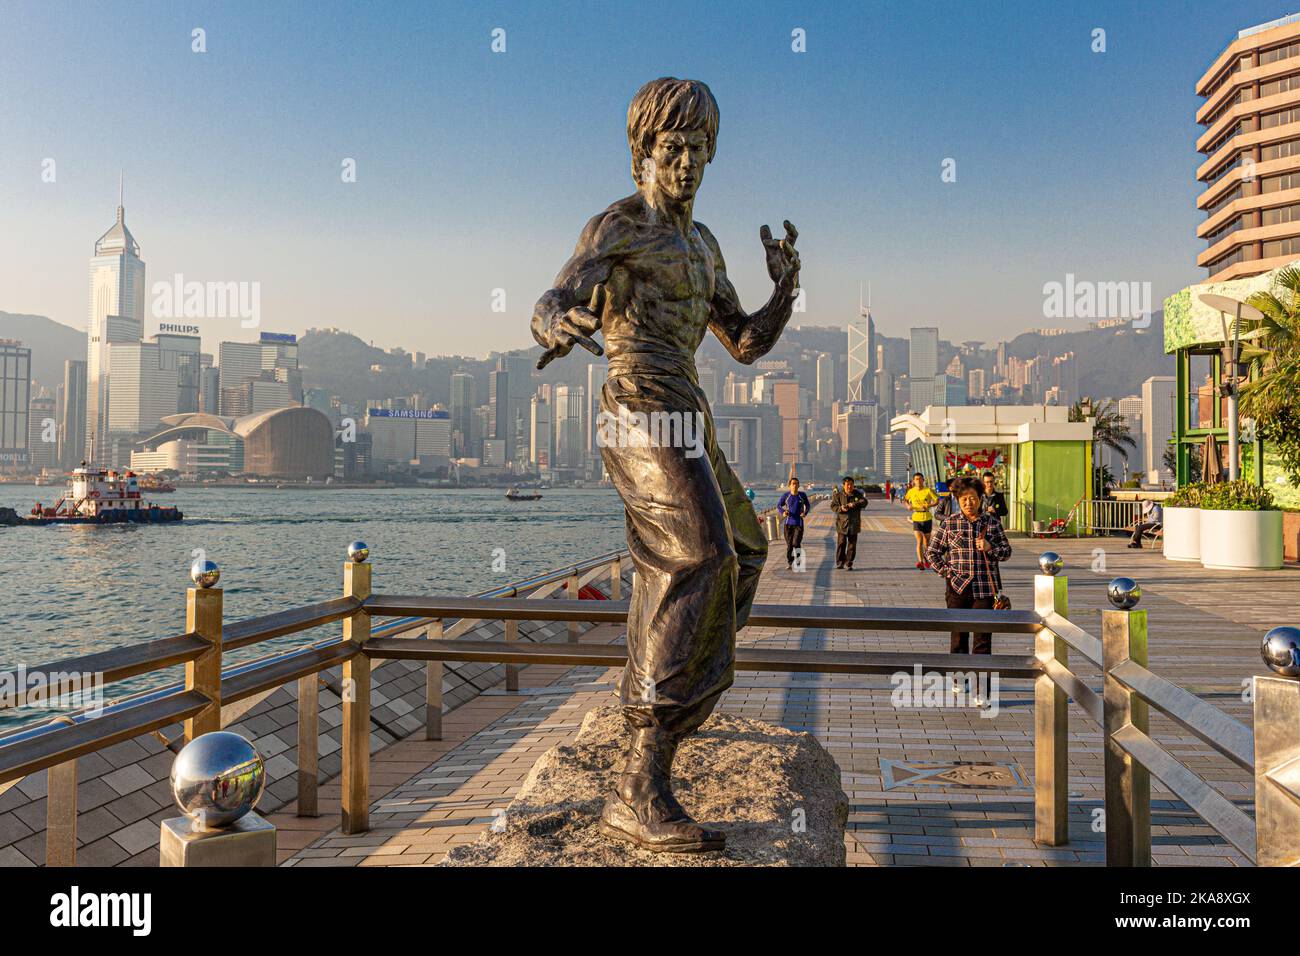 Statua di bronzo di Cao Chong-en dell'iconico artista marziale Bruce Lee, Lee Jun-fan, sulla Avenue of Stars, Tsim Sha Tsui, Kowloon, Hong Kong, Cina Foto Stock